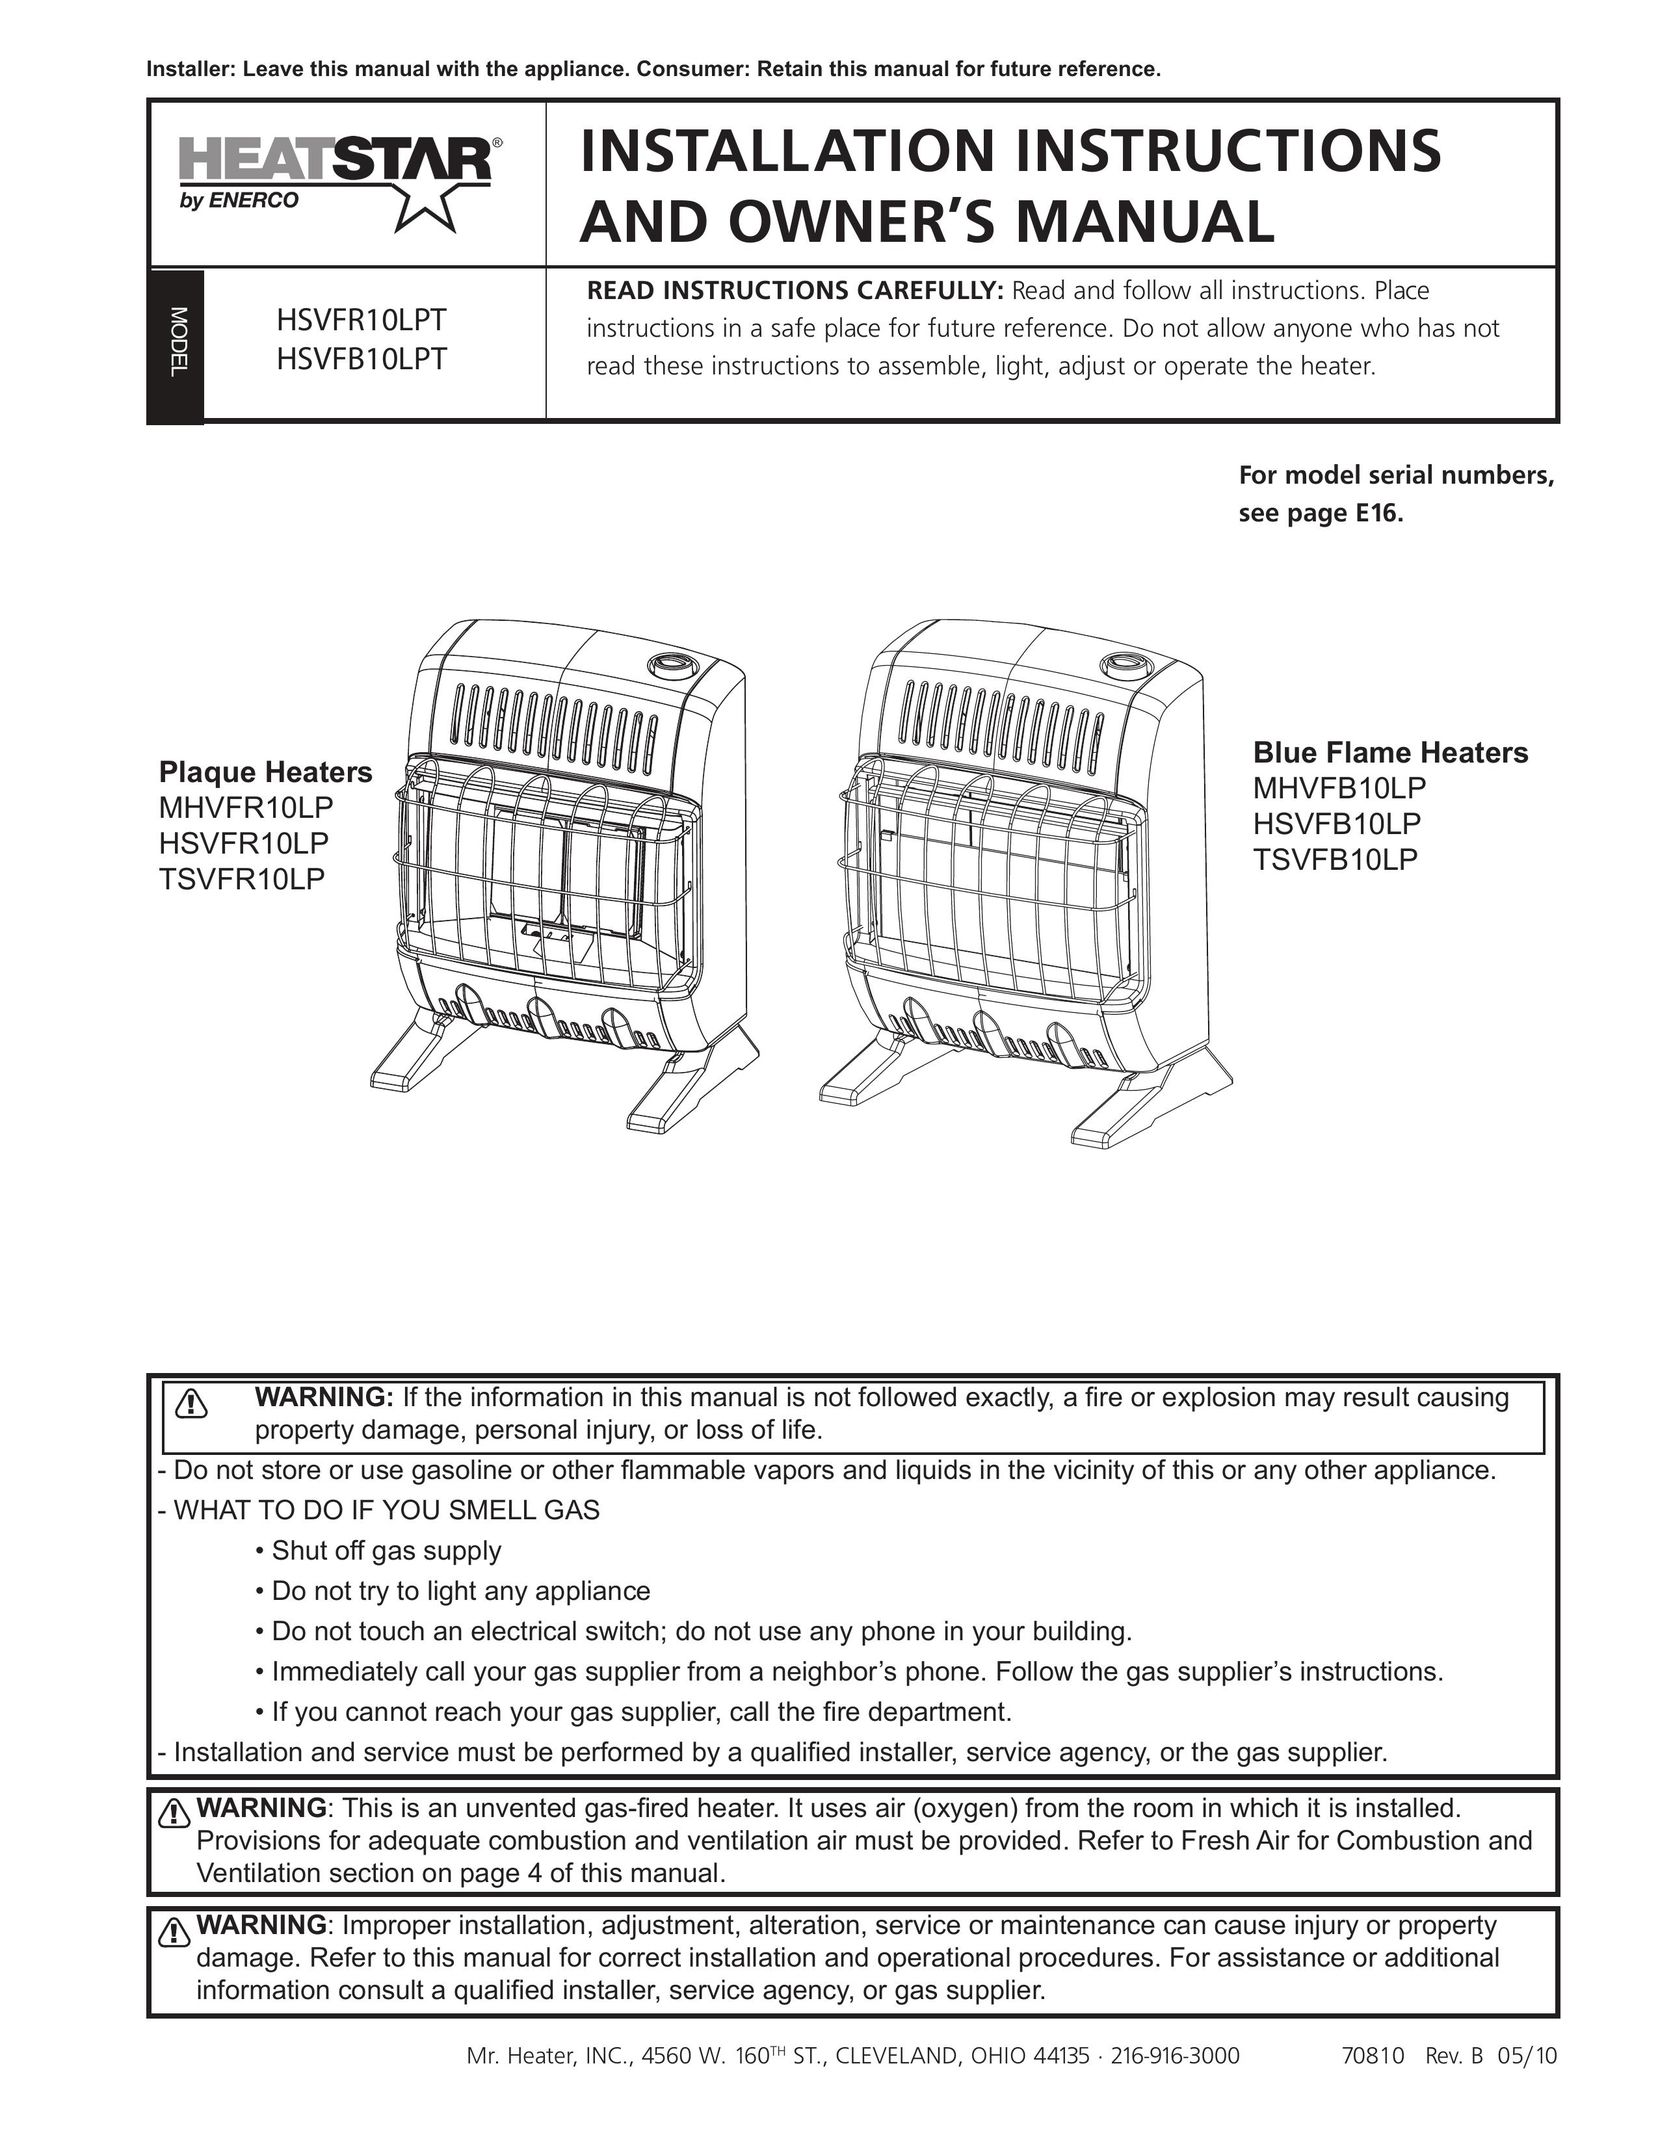 Enerco MHVFR10LP Gas Heater User Manual